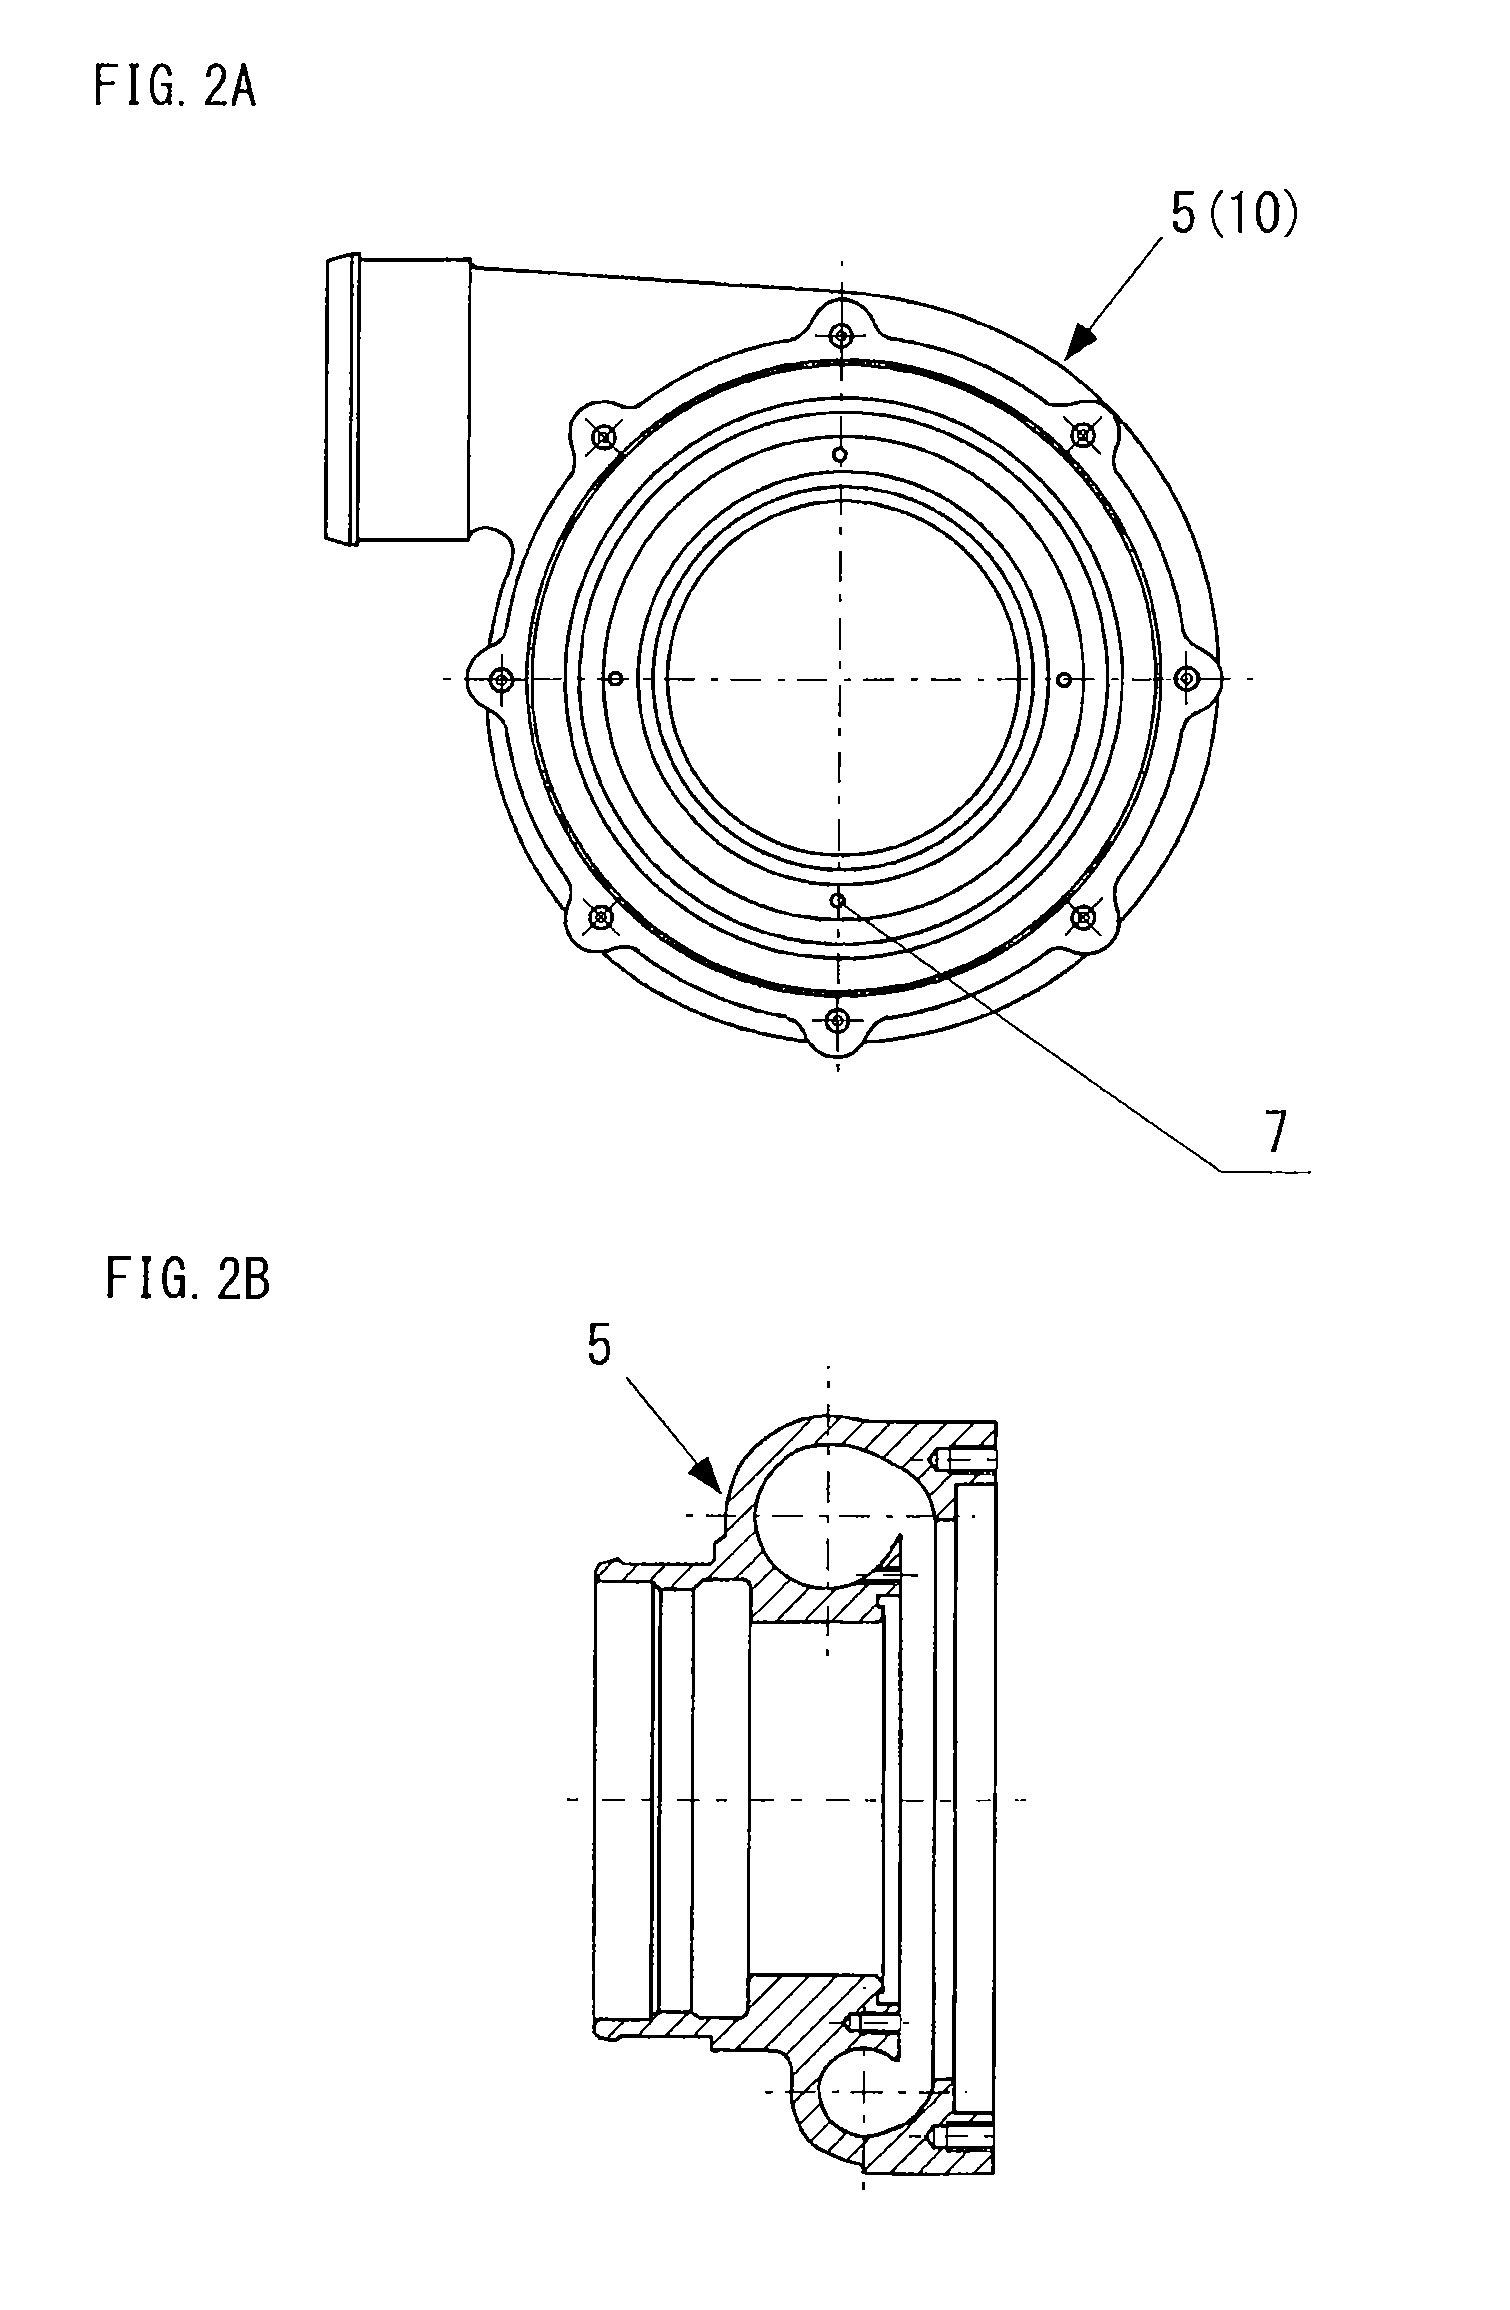 Centrifugal compressor having an asymmetric self-recirculating casing treatment